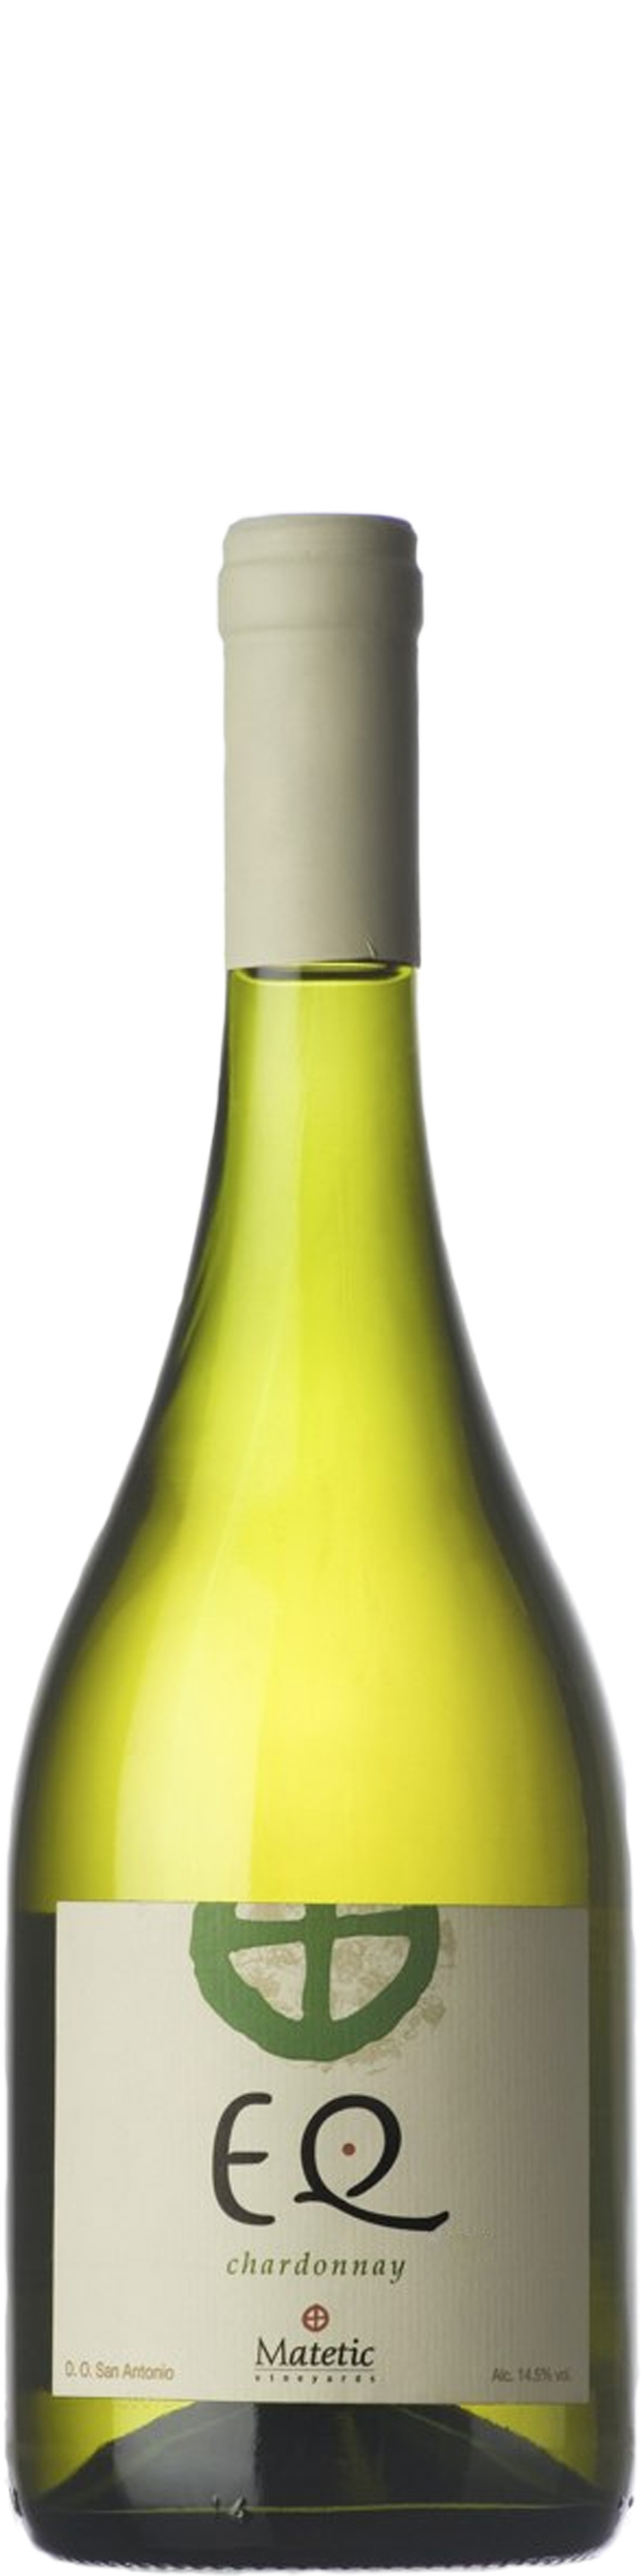 Bottle shot of 2012 EQ Chardonnay Organic